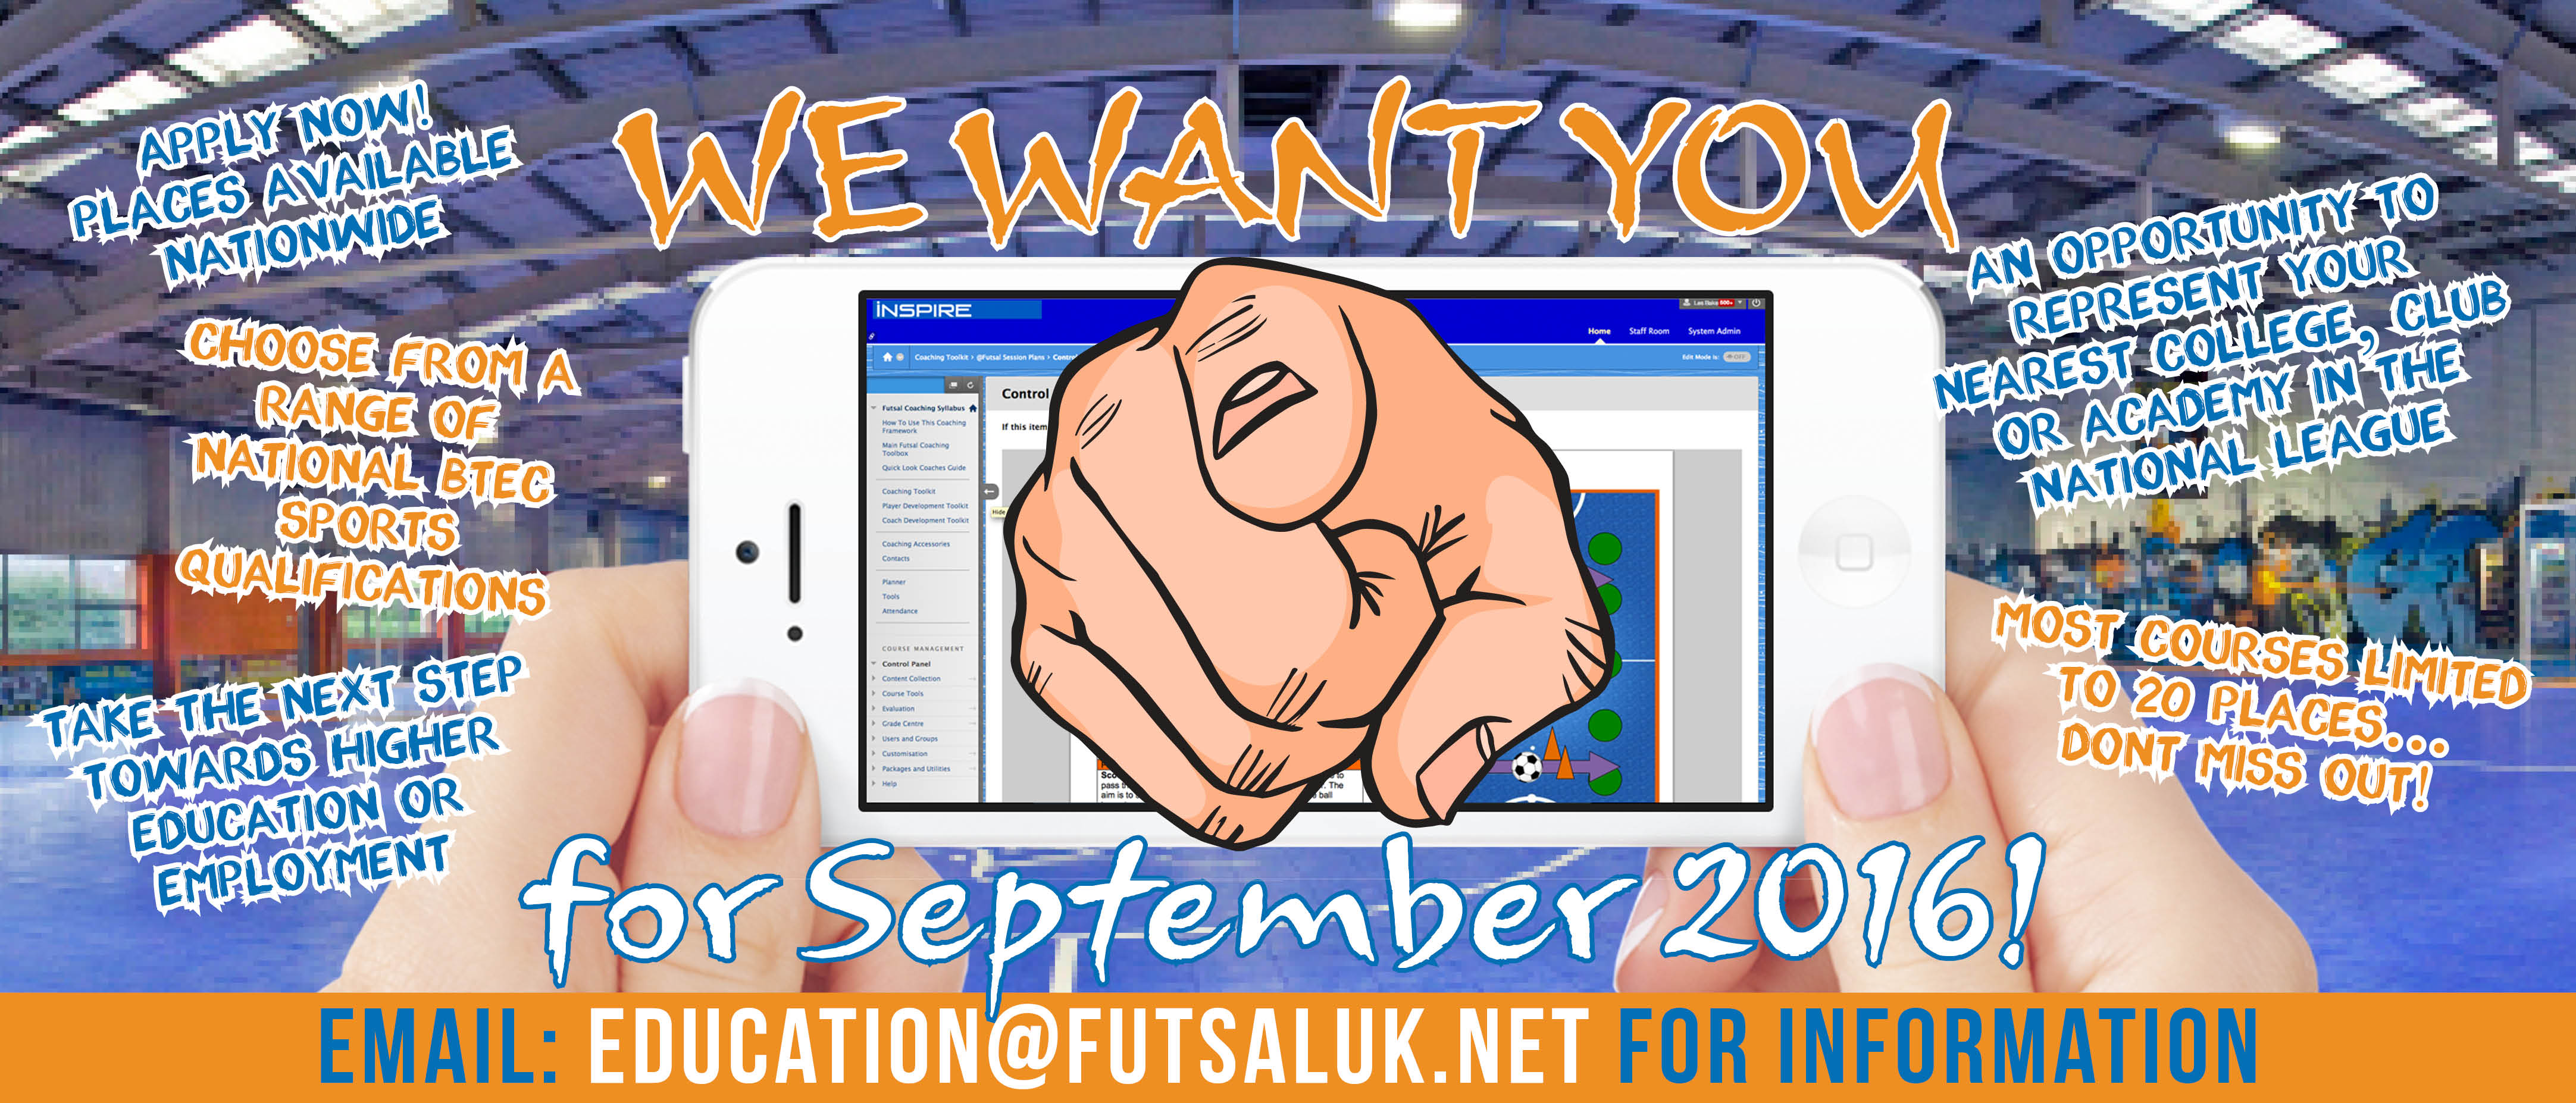 We-want-you-for-September-2015-v4v11